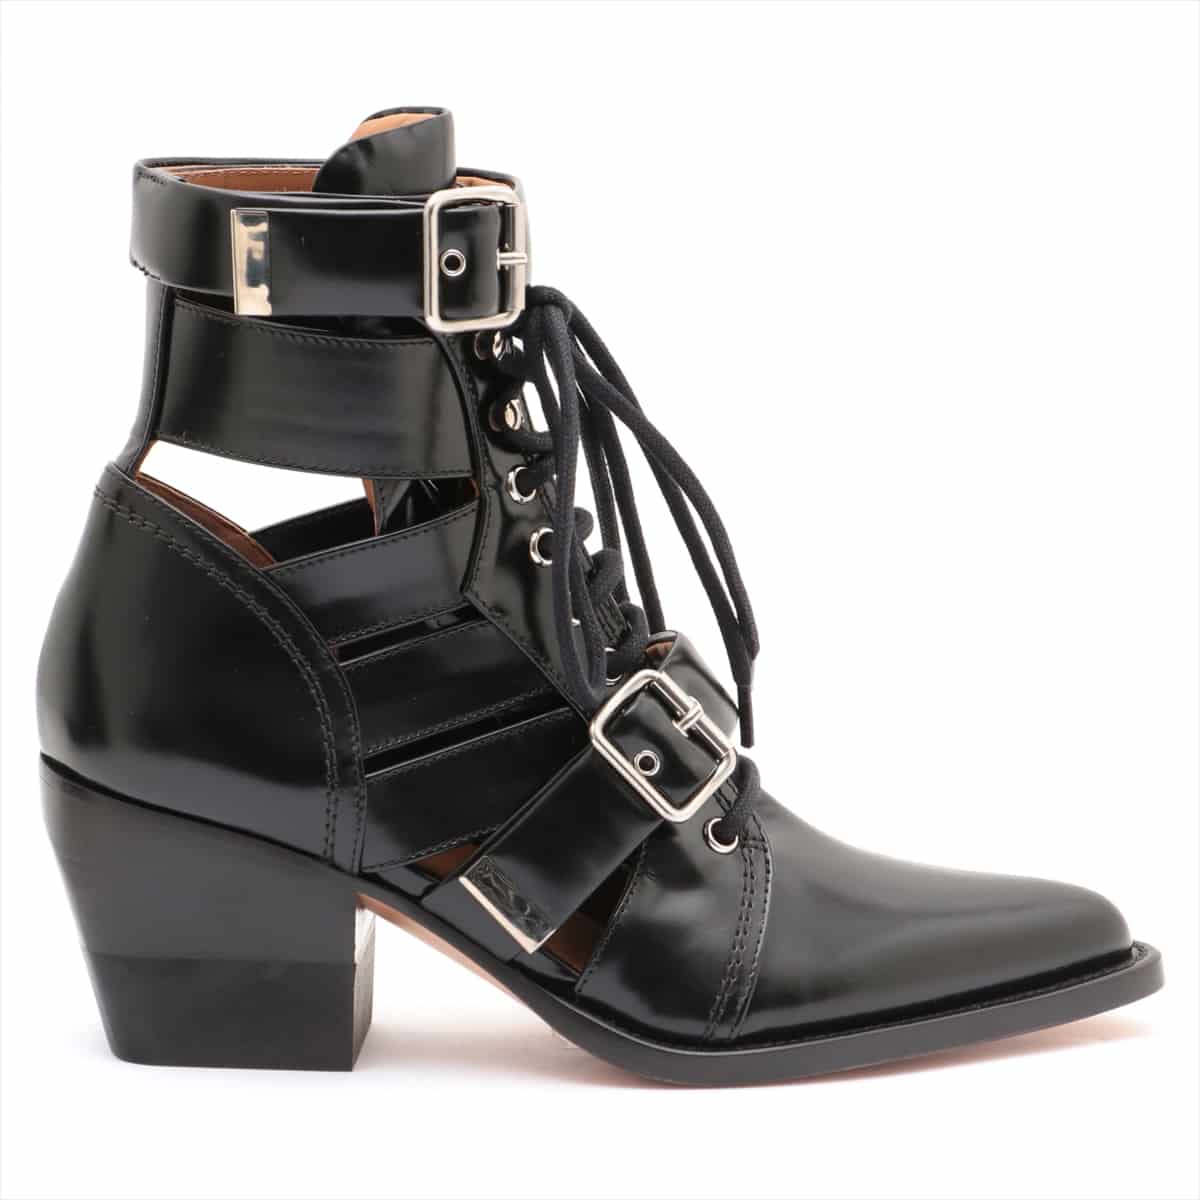 Chloe Leather Boots 39 Ladies' Black